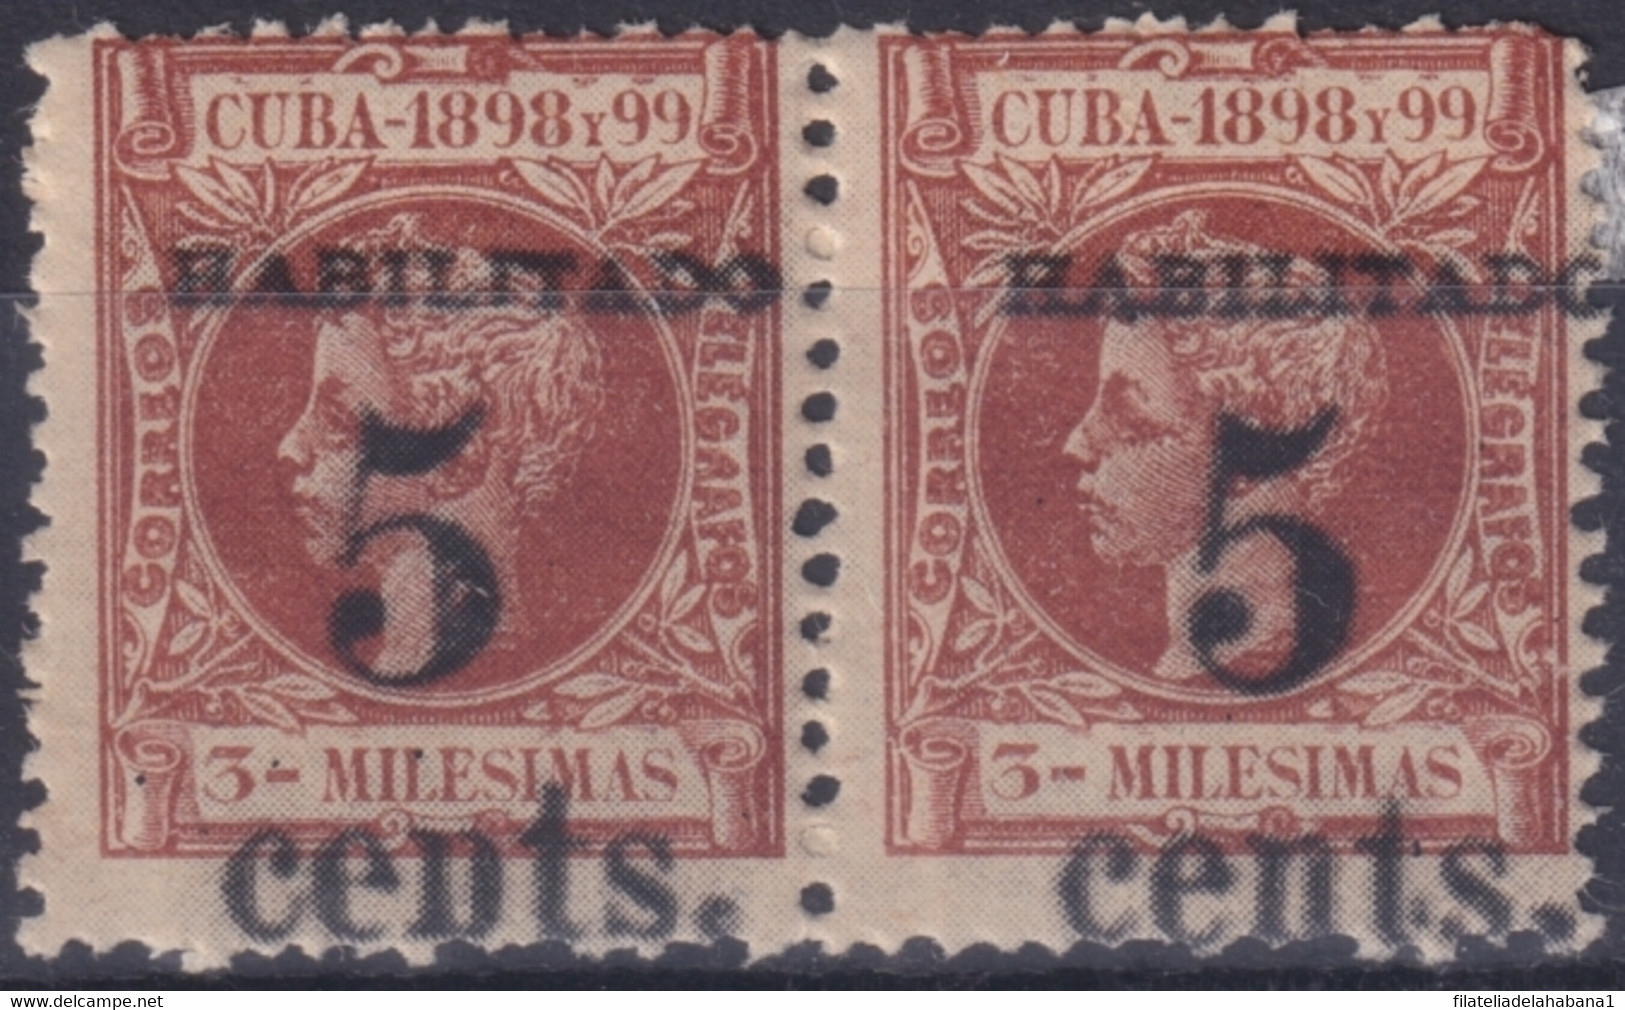 1899-481 CUBA 1899 5c S. 3c US OCCUPATION 2th ISSUE PAIR PHILATELIC FORGERY. - Ongebruikt